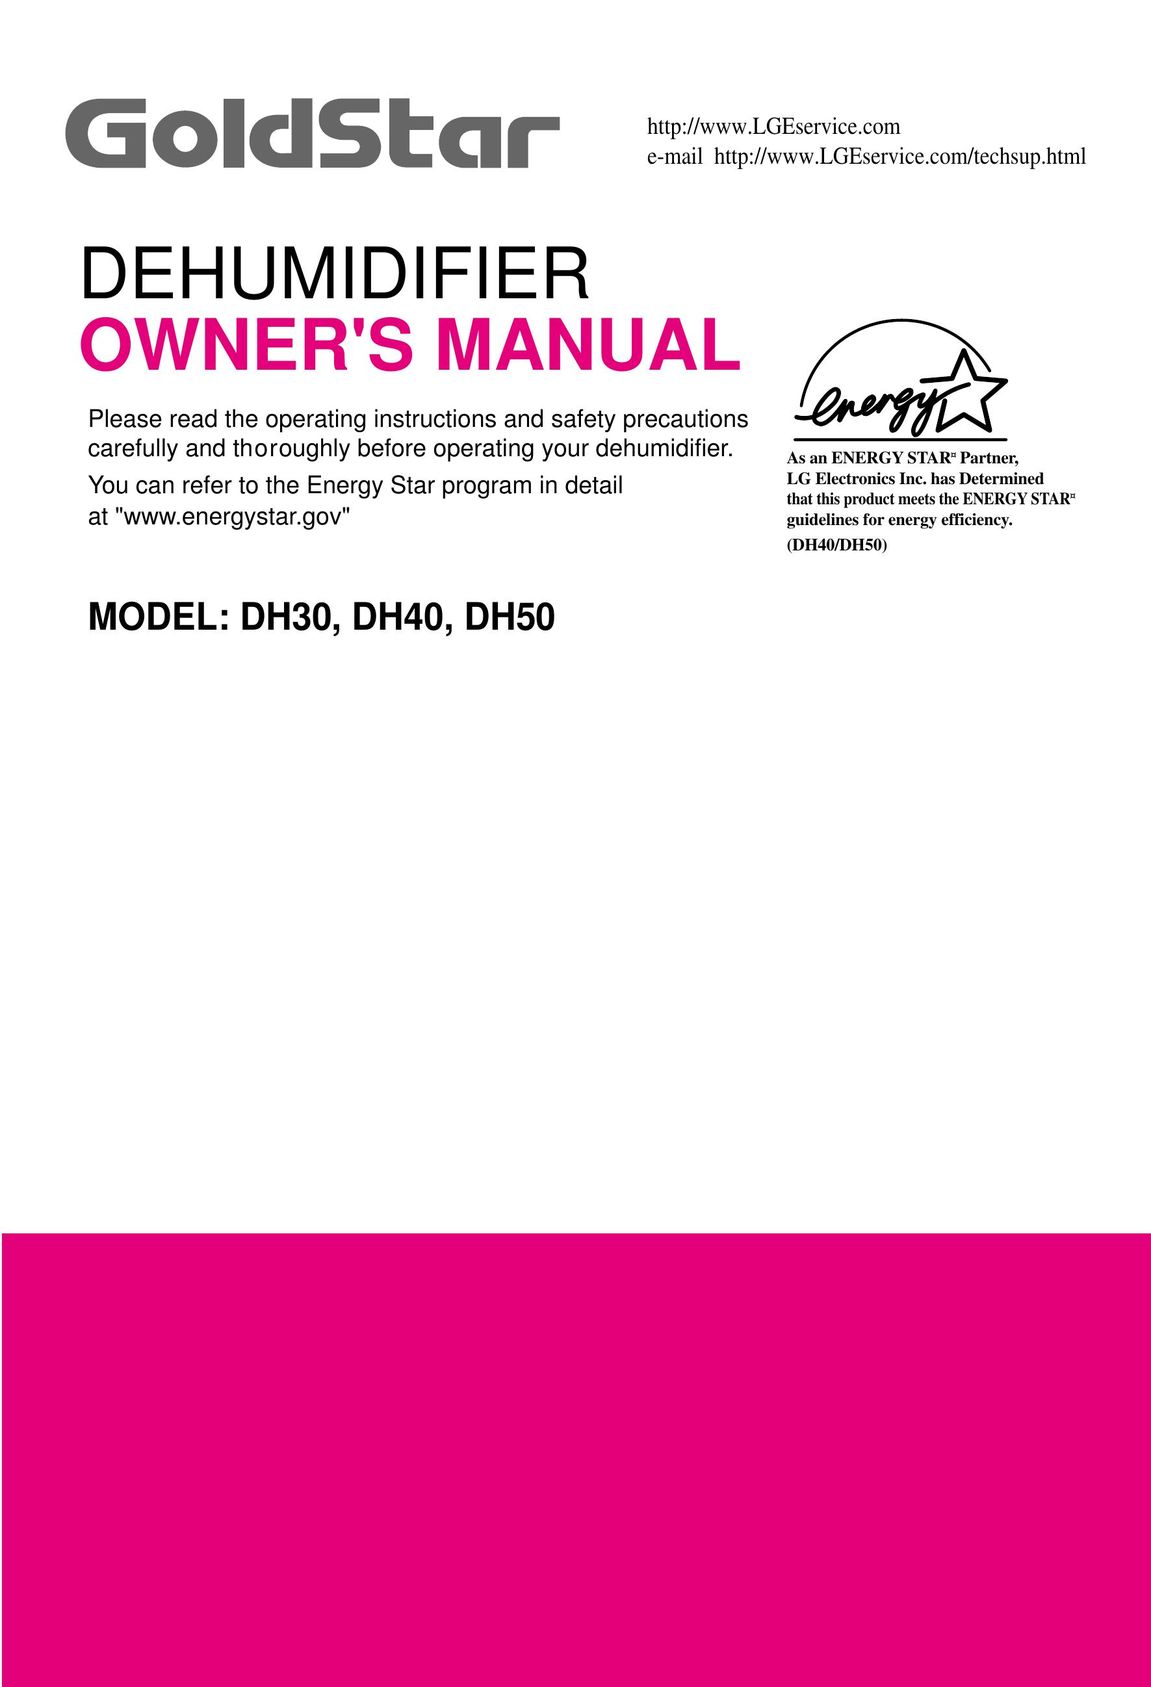 Goldstar DH50 Dehumidifier User Manual